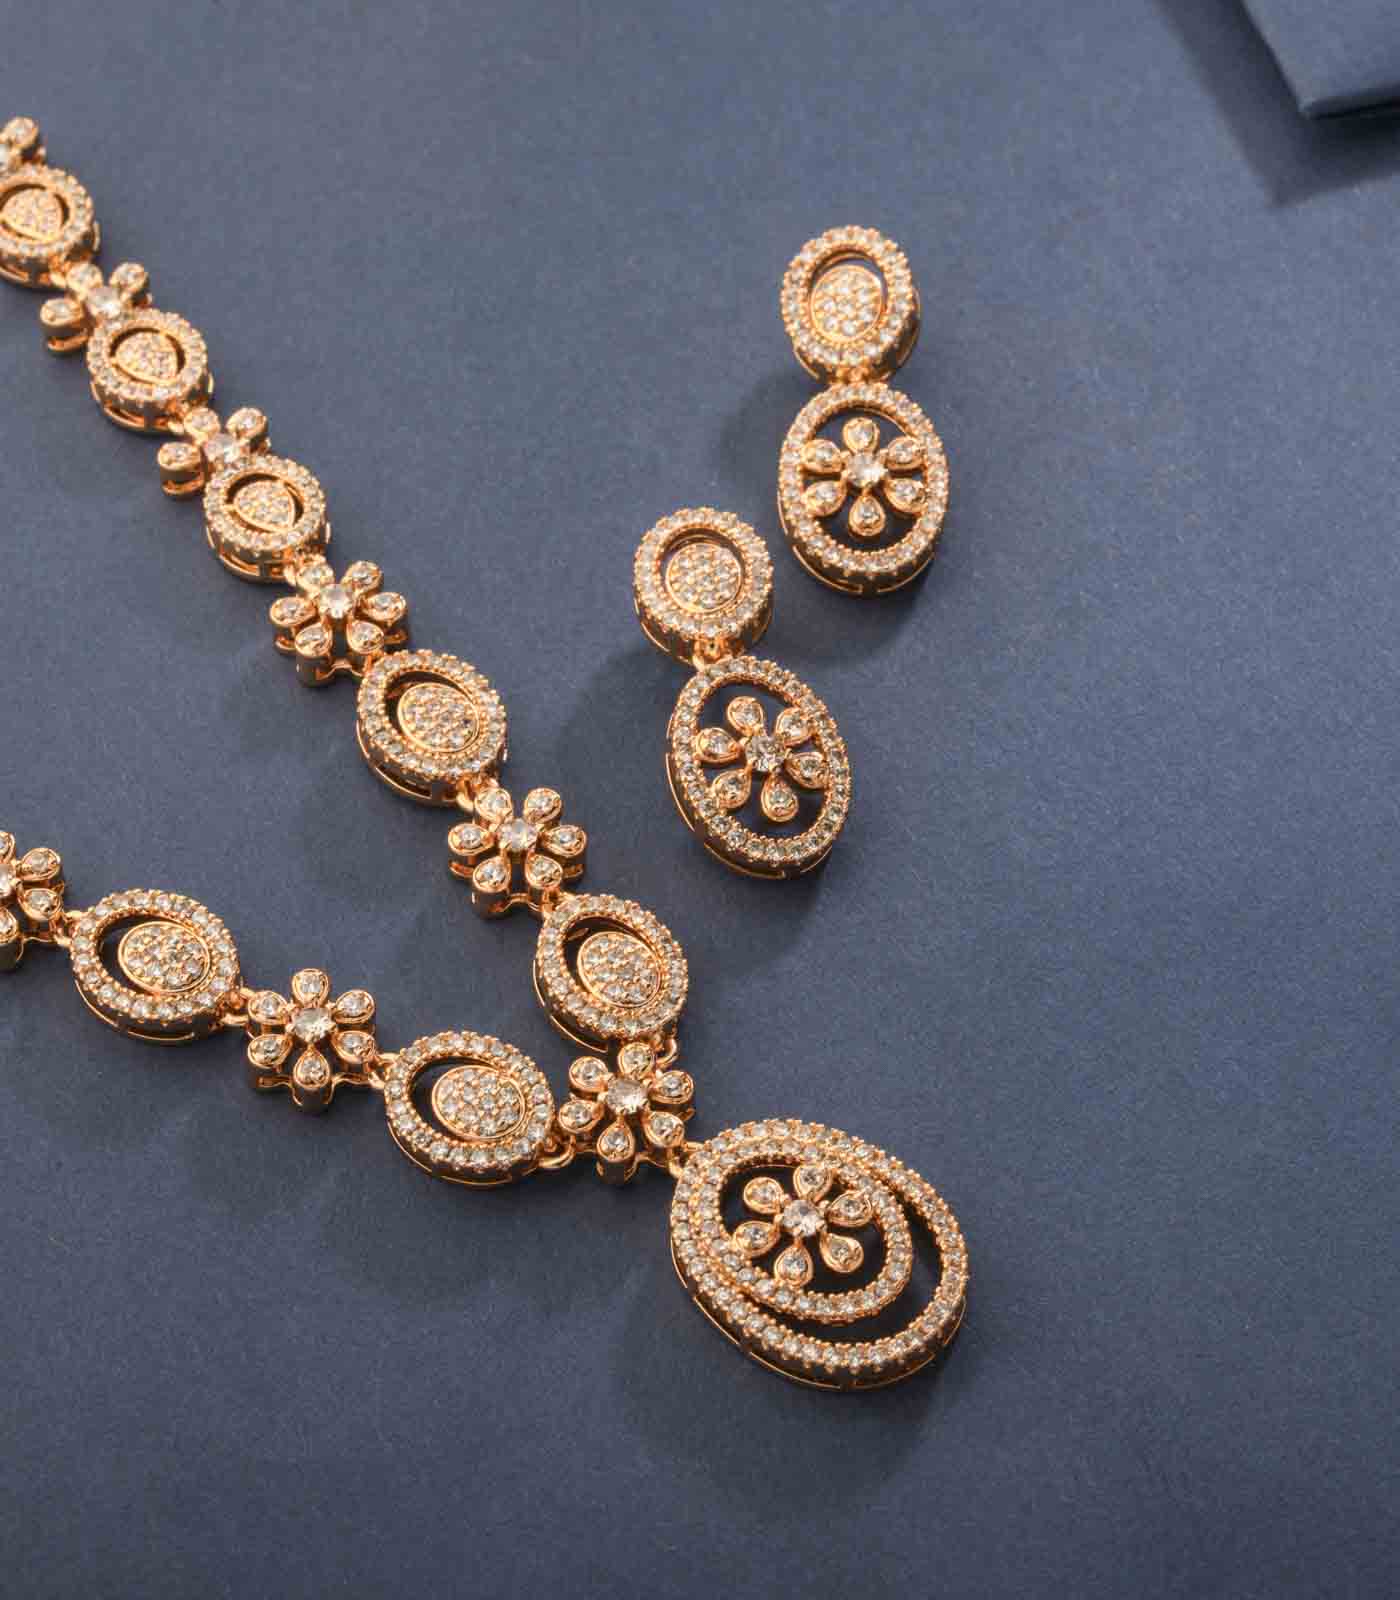 Rakish Golden Floral Necklace (Brass)